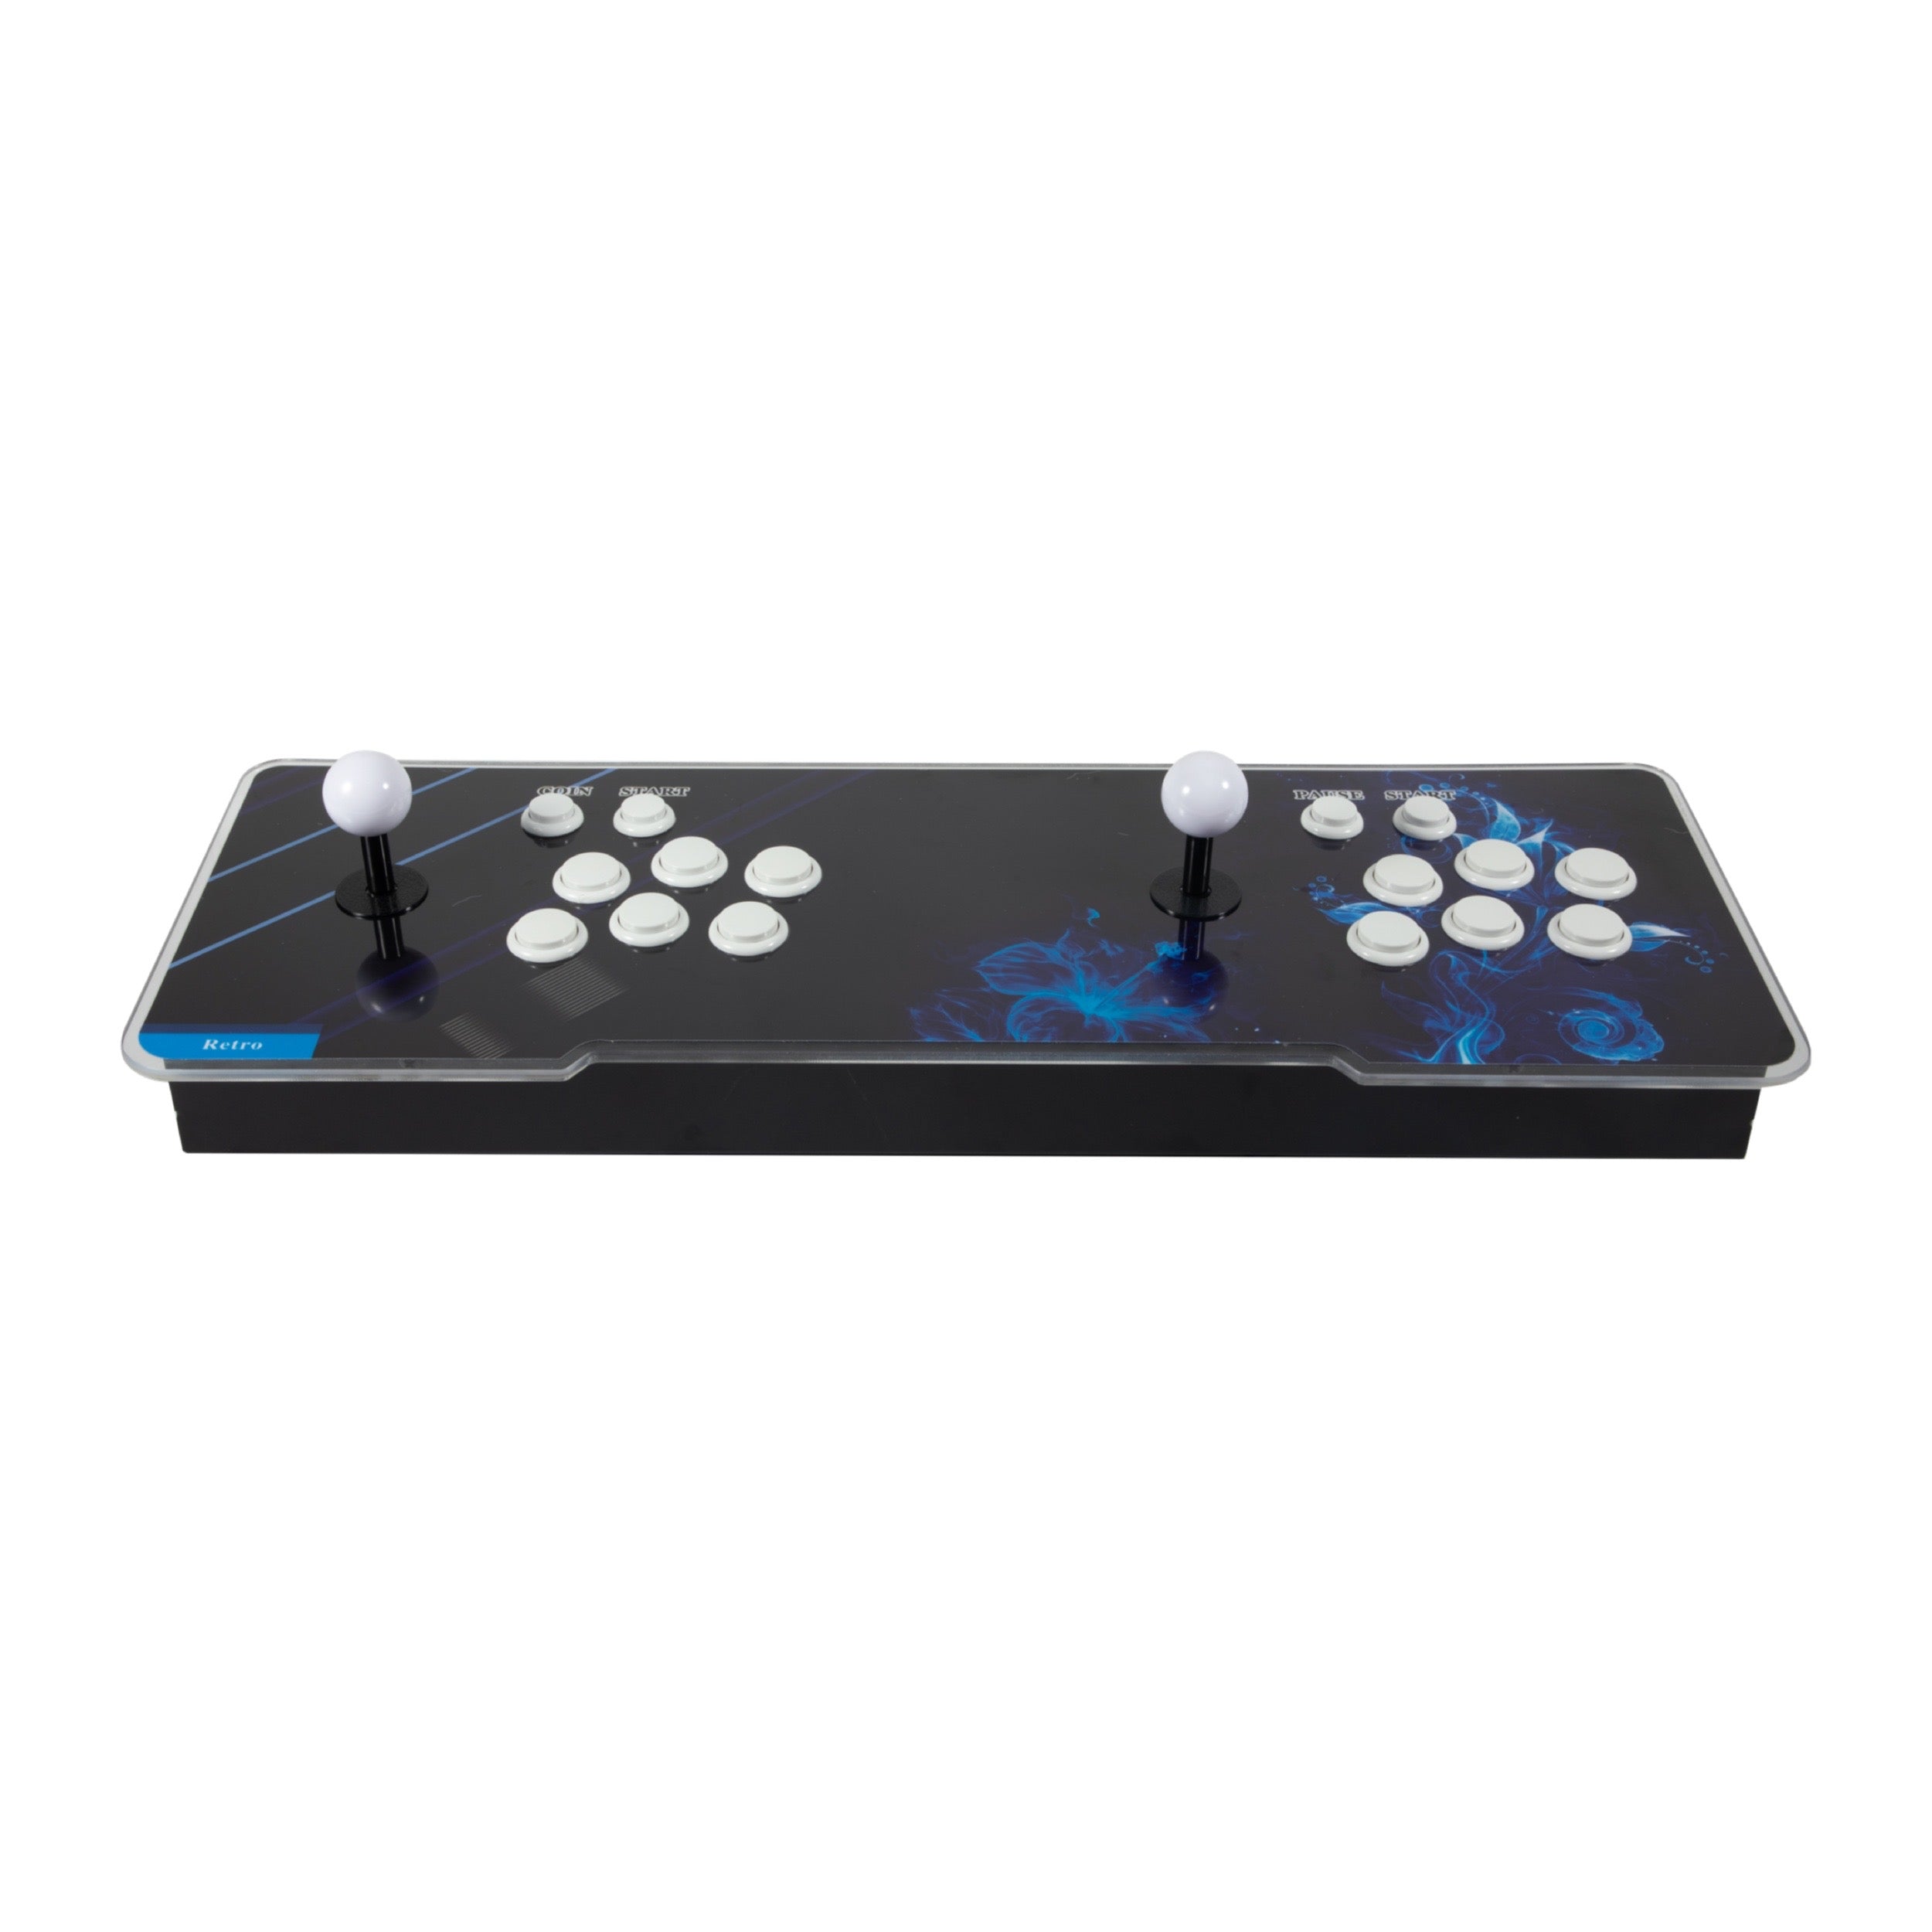 Arcade Joystick Game Console (Black & Blue)